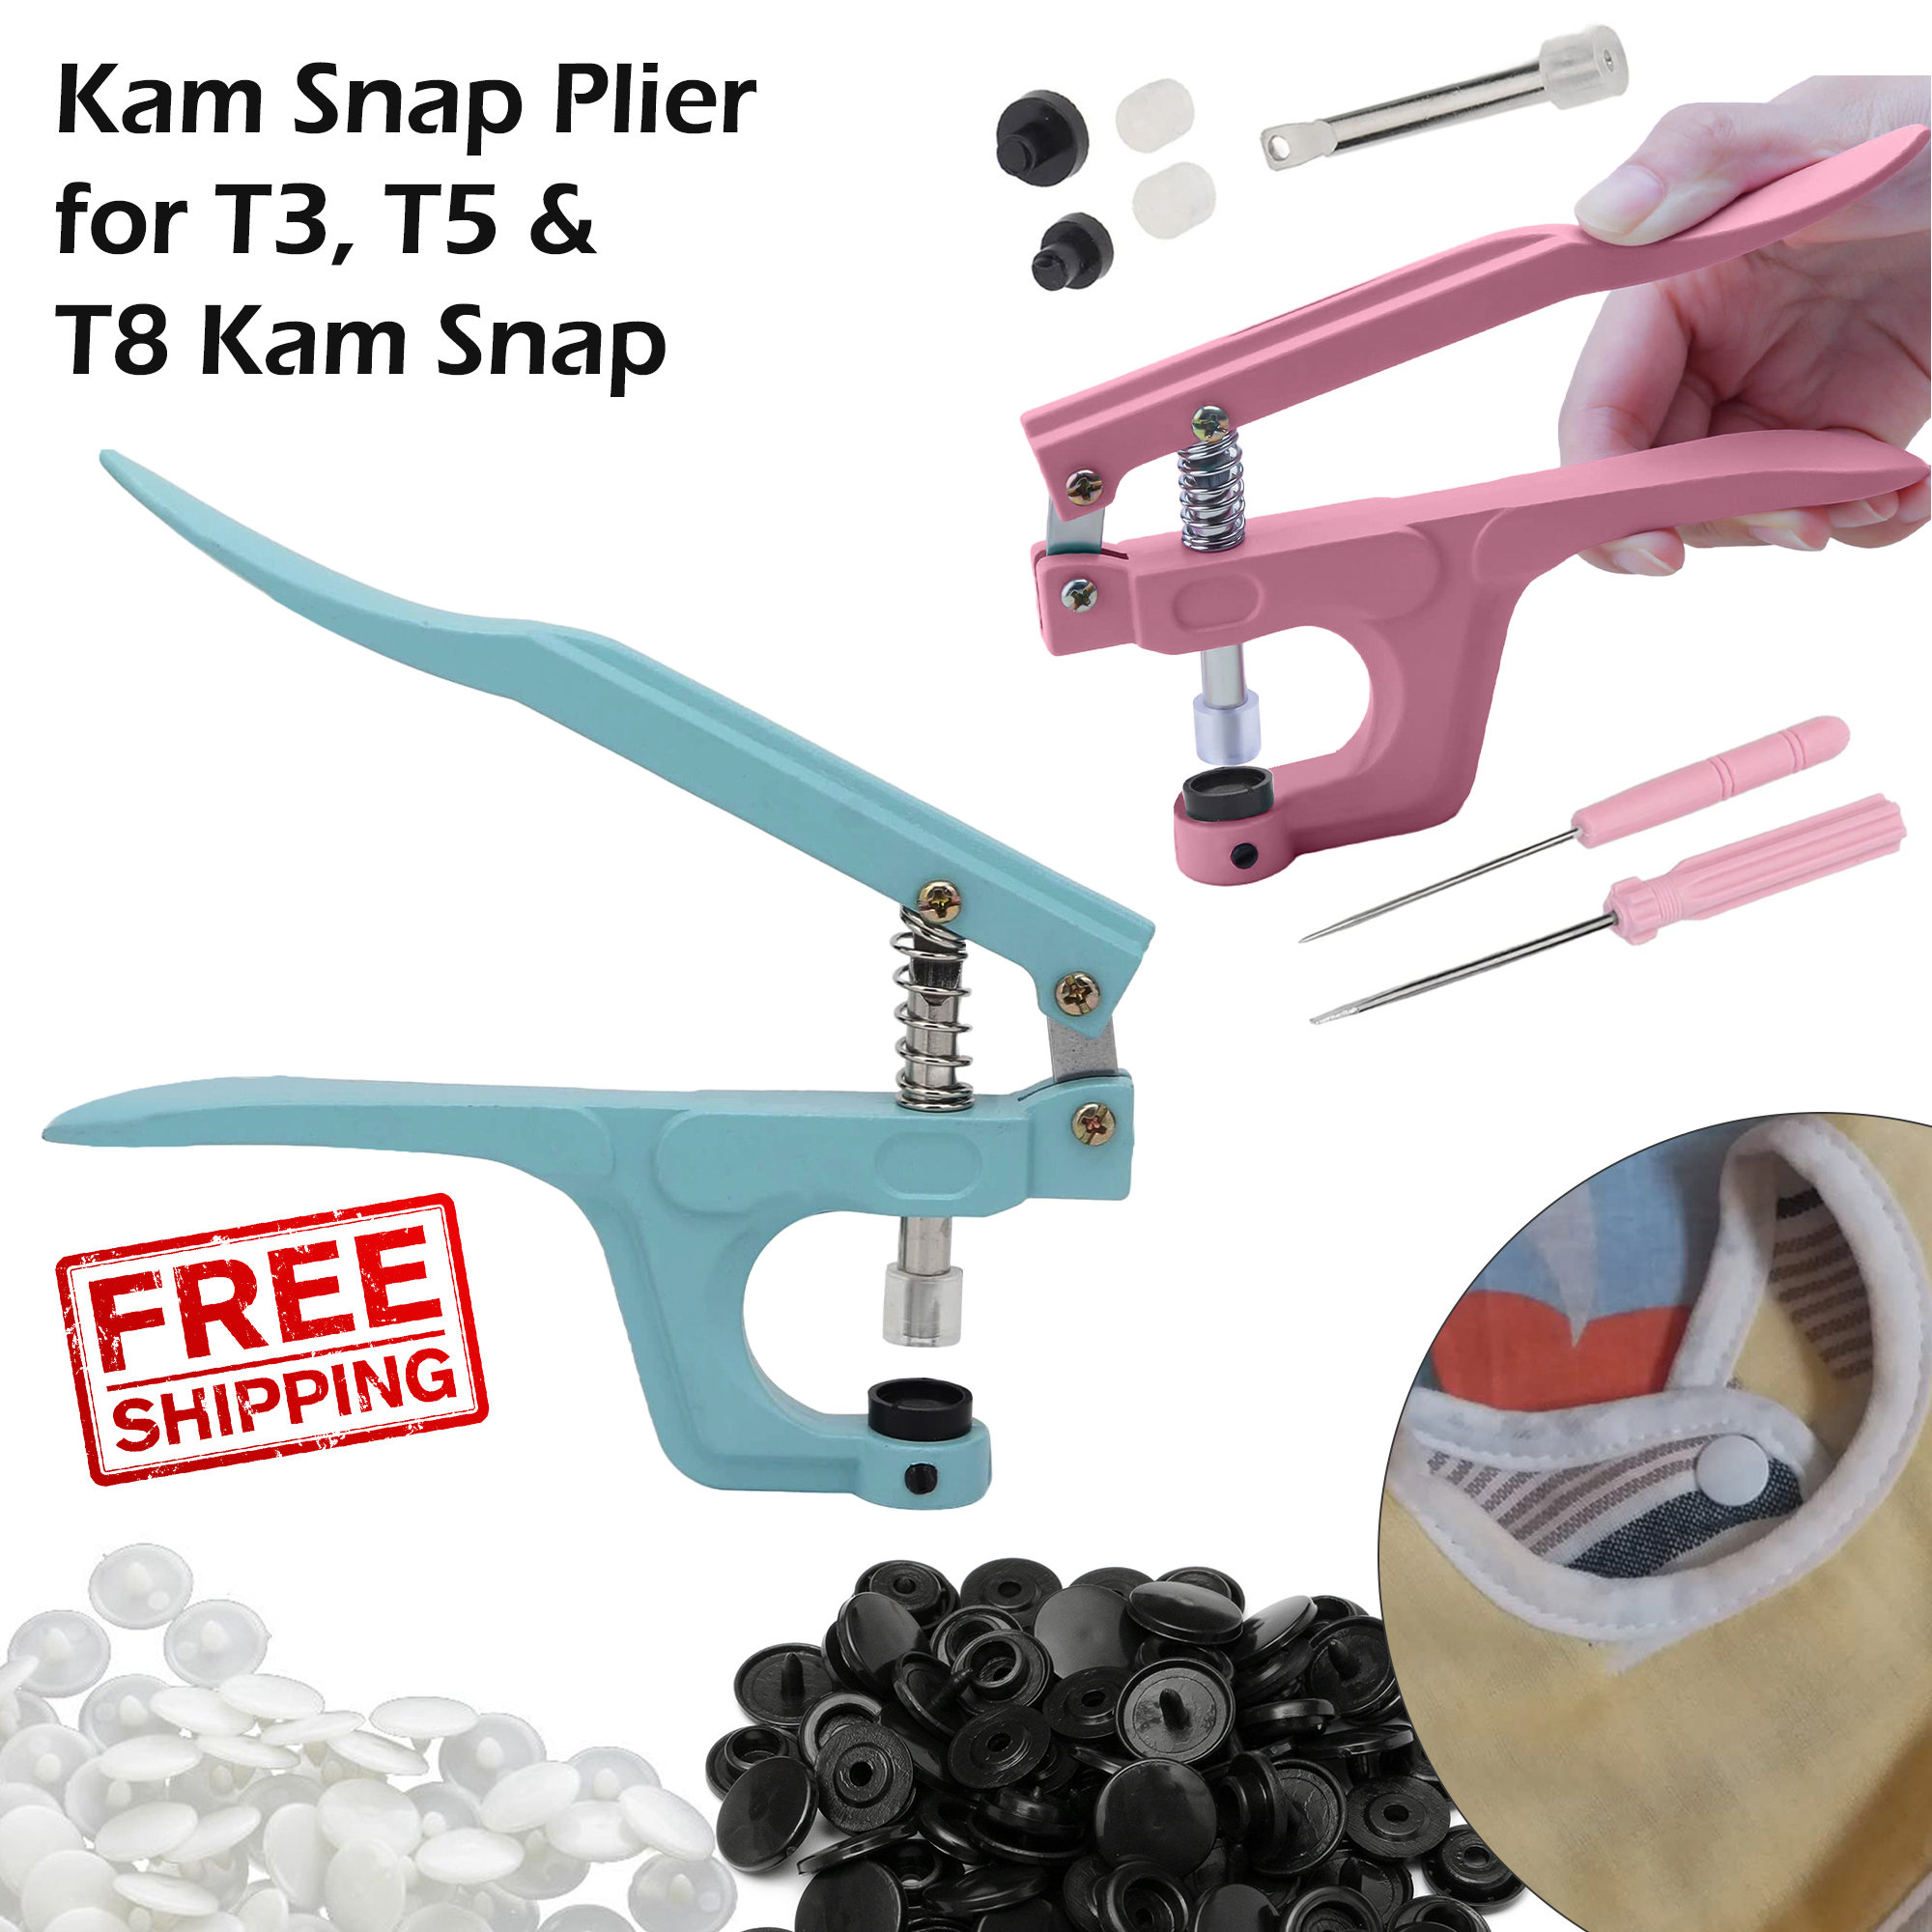 Kam Snap Dies for Hand Press T3 T5 T8 Plastic Snap Dies Press Sold